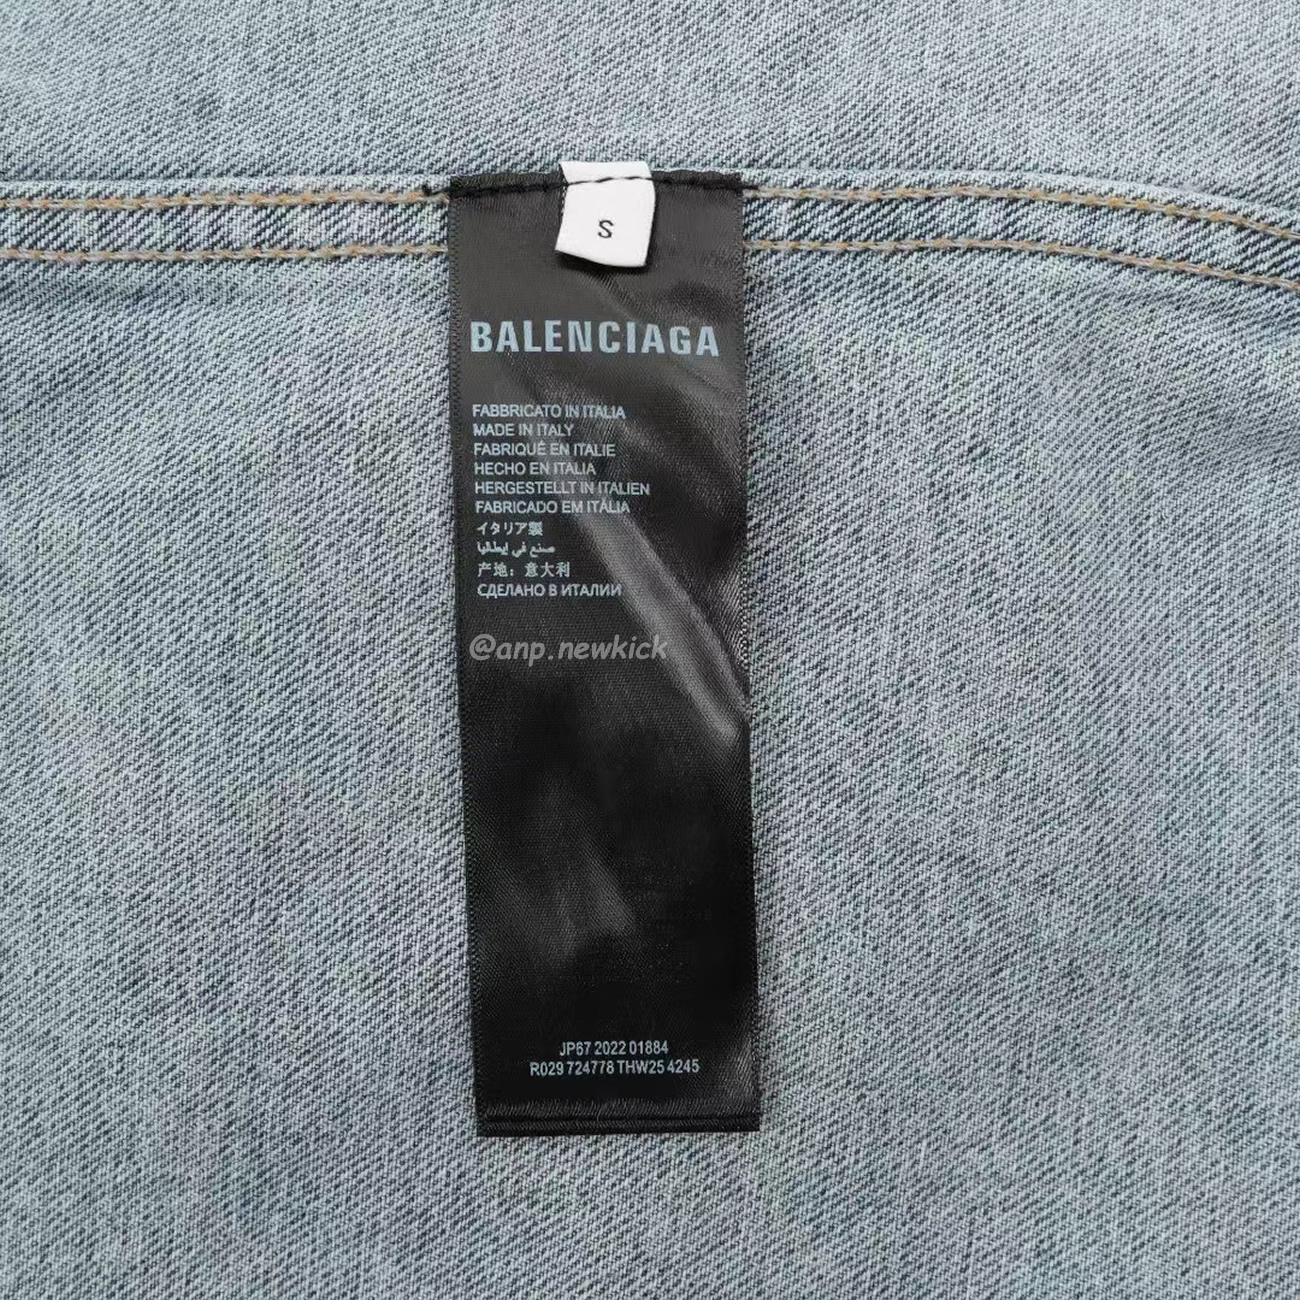 Balenciaga Retro Denim Jacket (5) - newkick.org